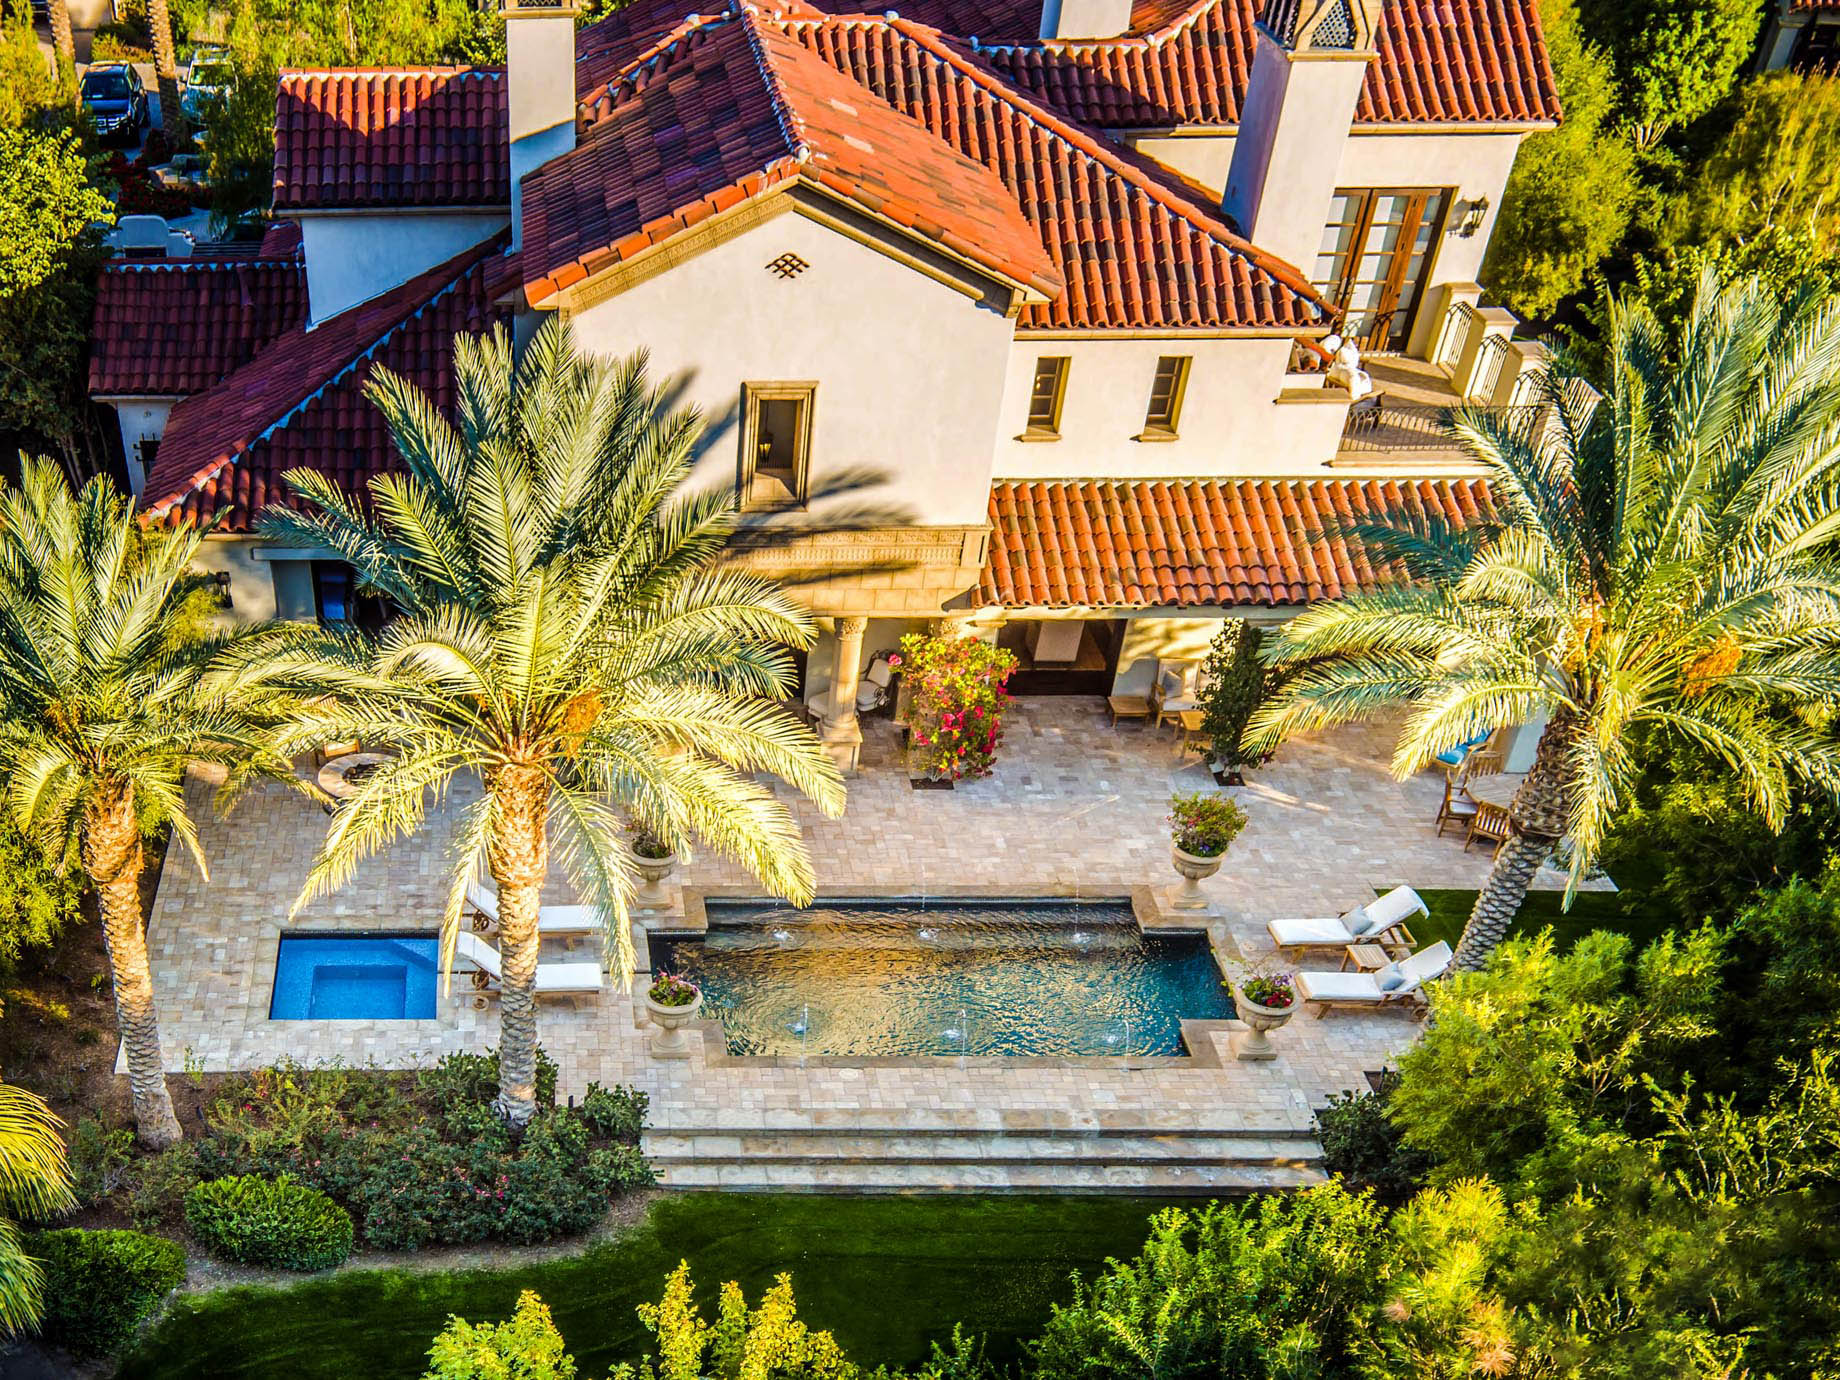 Sylvester Stallone Residence - Humboldt Blvd, La Quinta, CA, USA